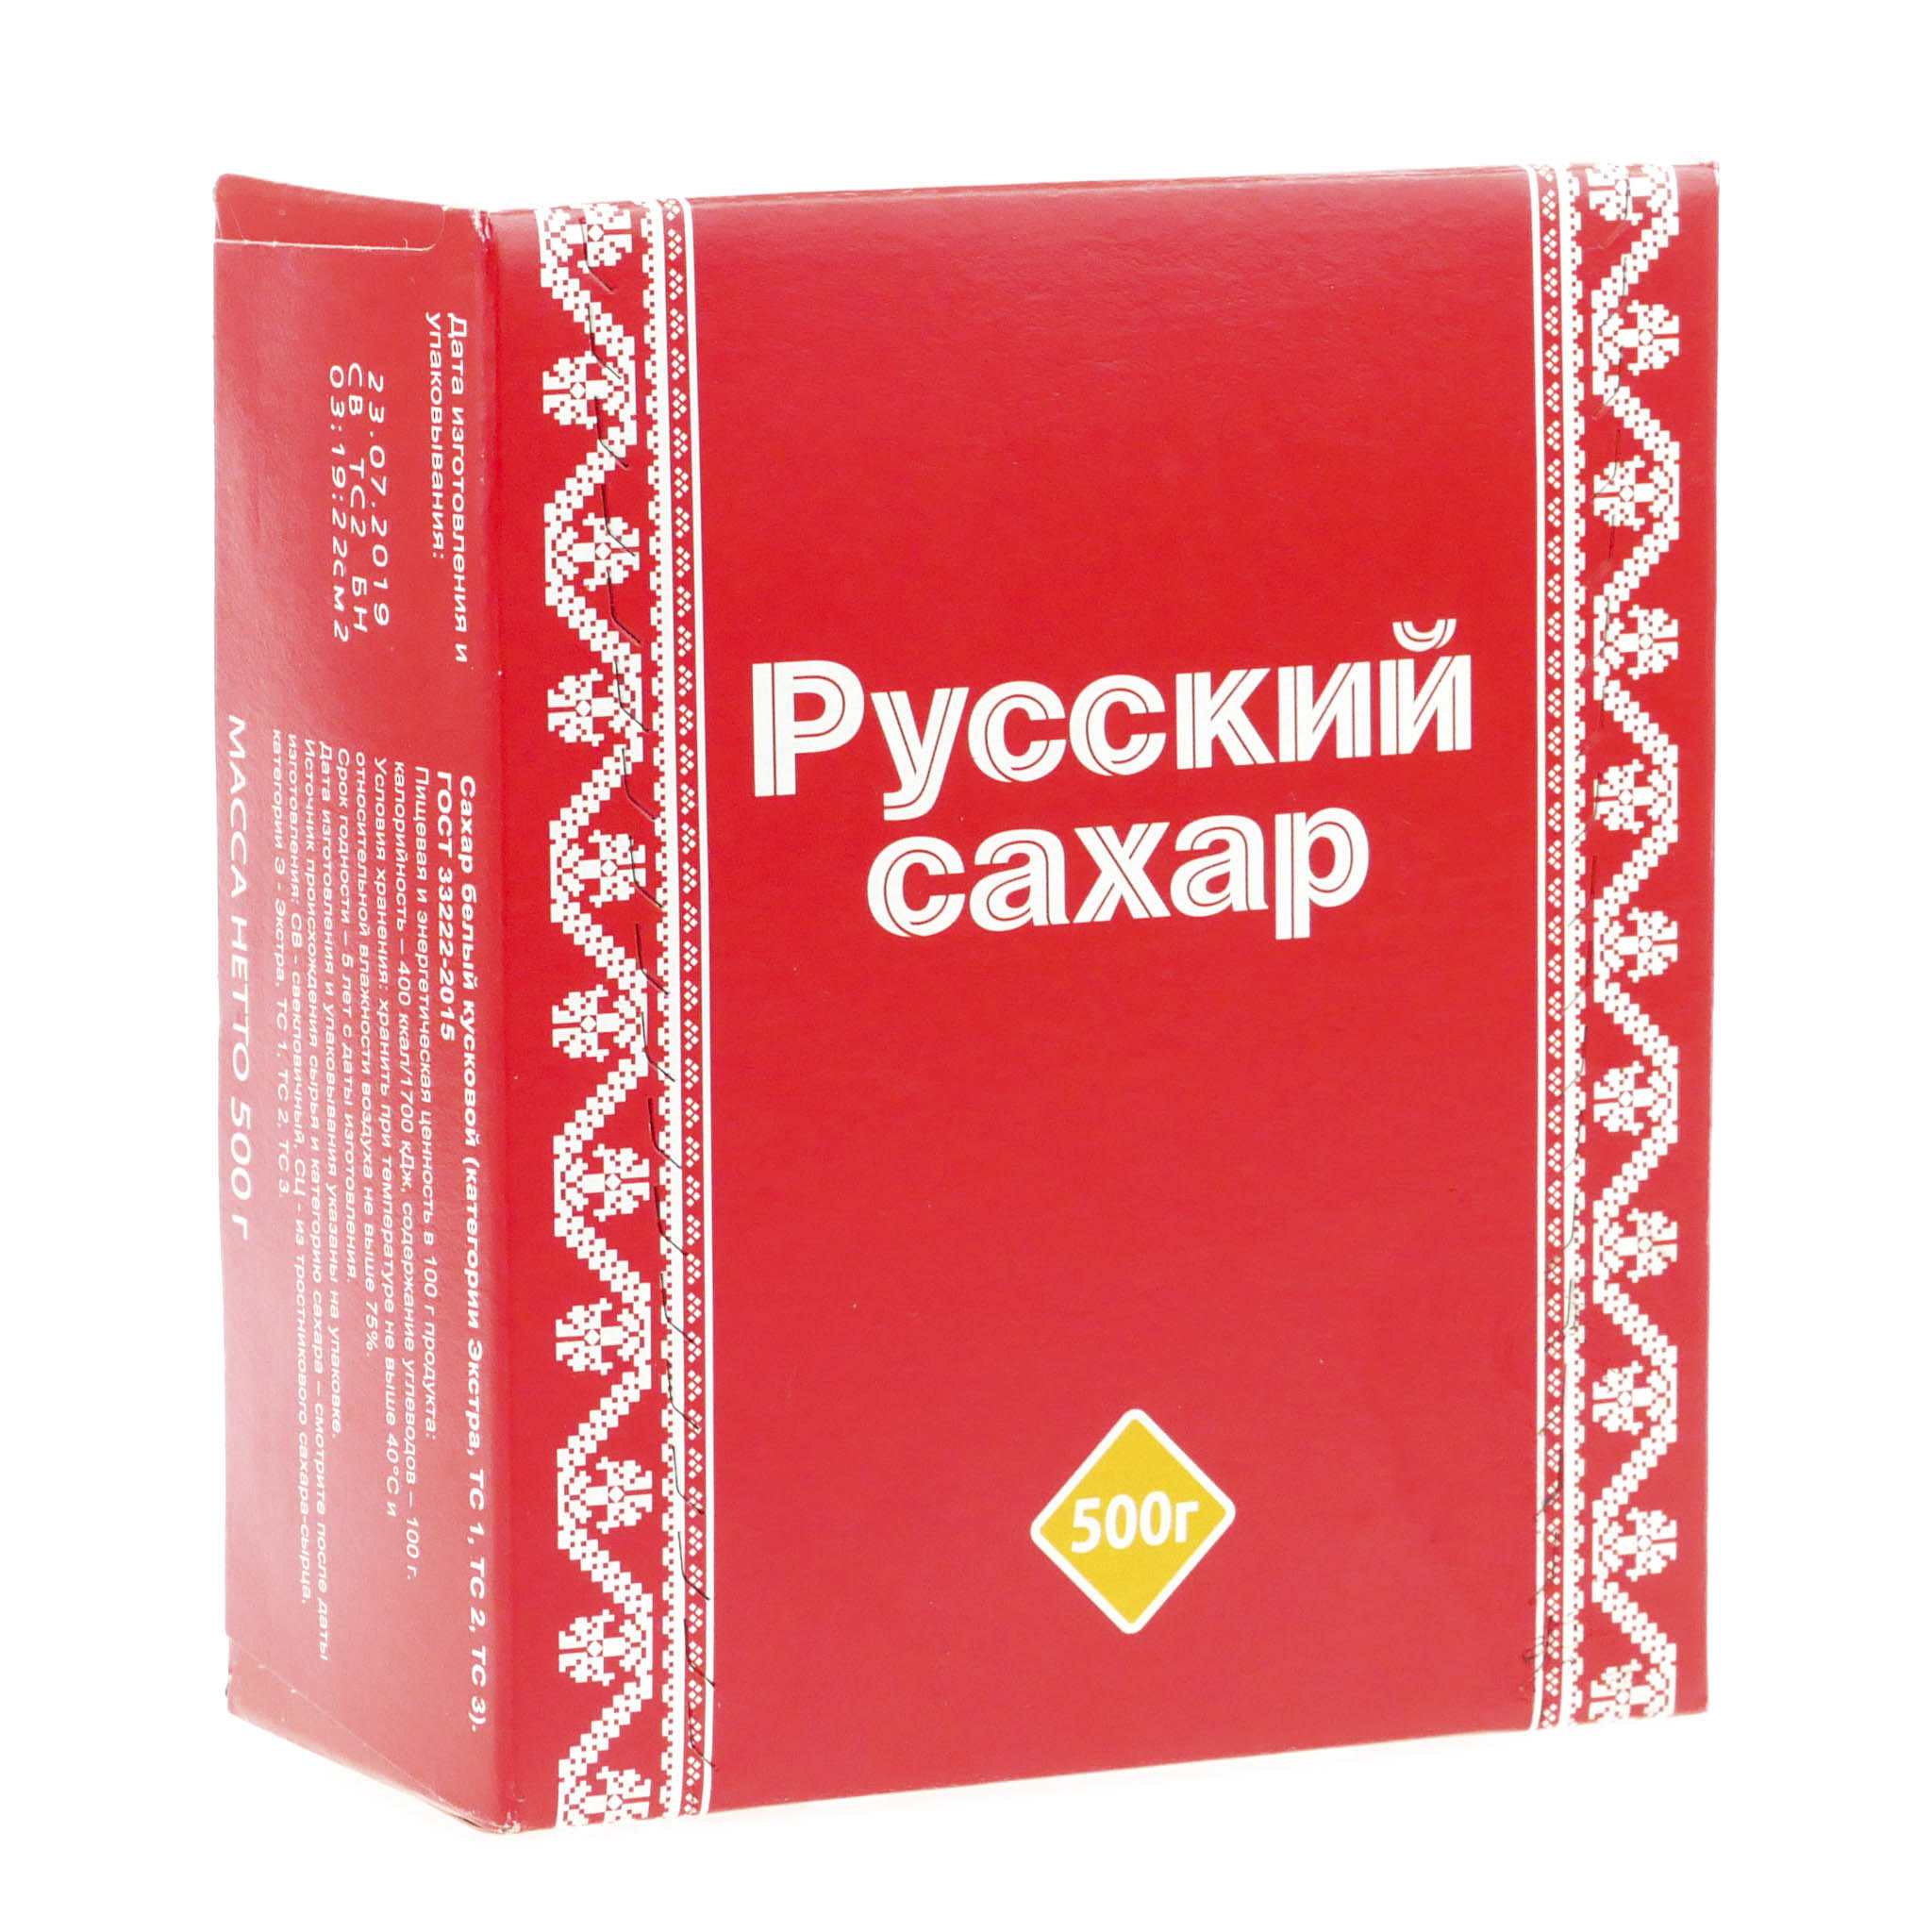 Сахар-рафинад Русский прессованный 500 г сахар рафинад русский сахар 1 кг